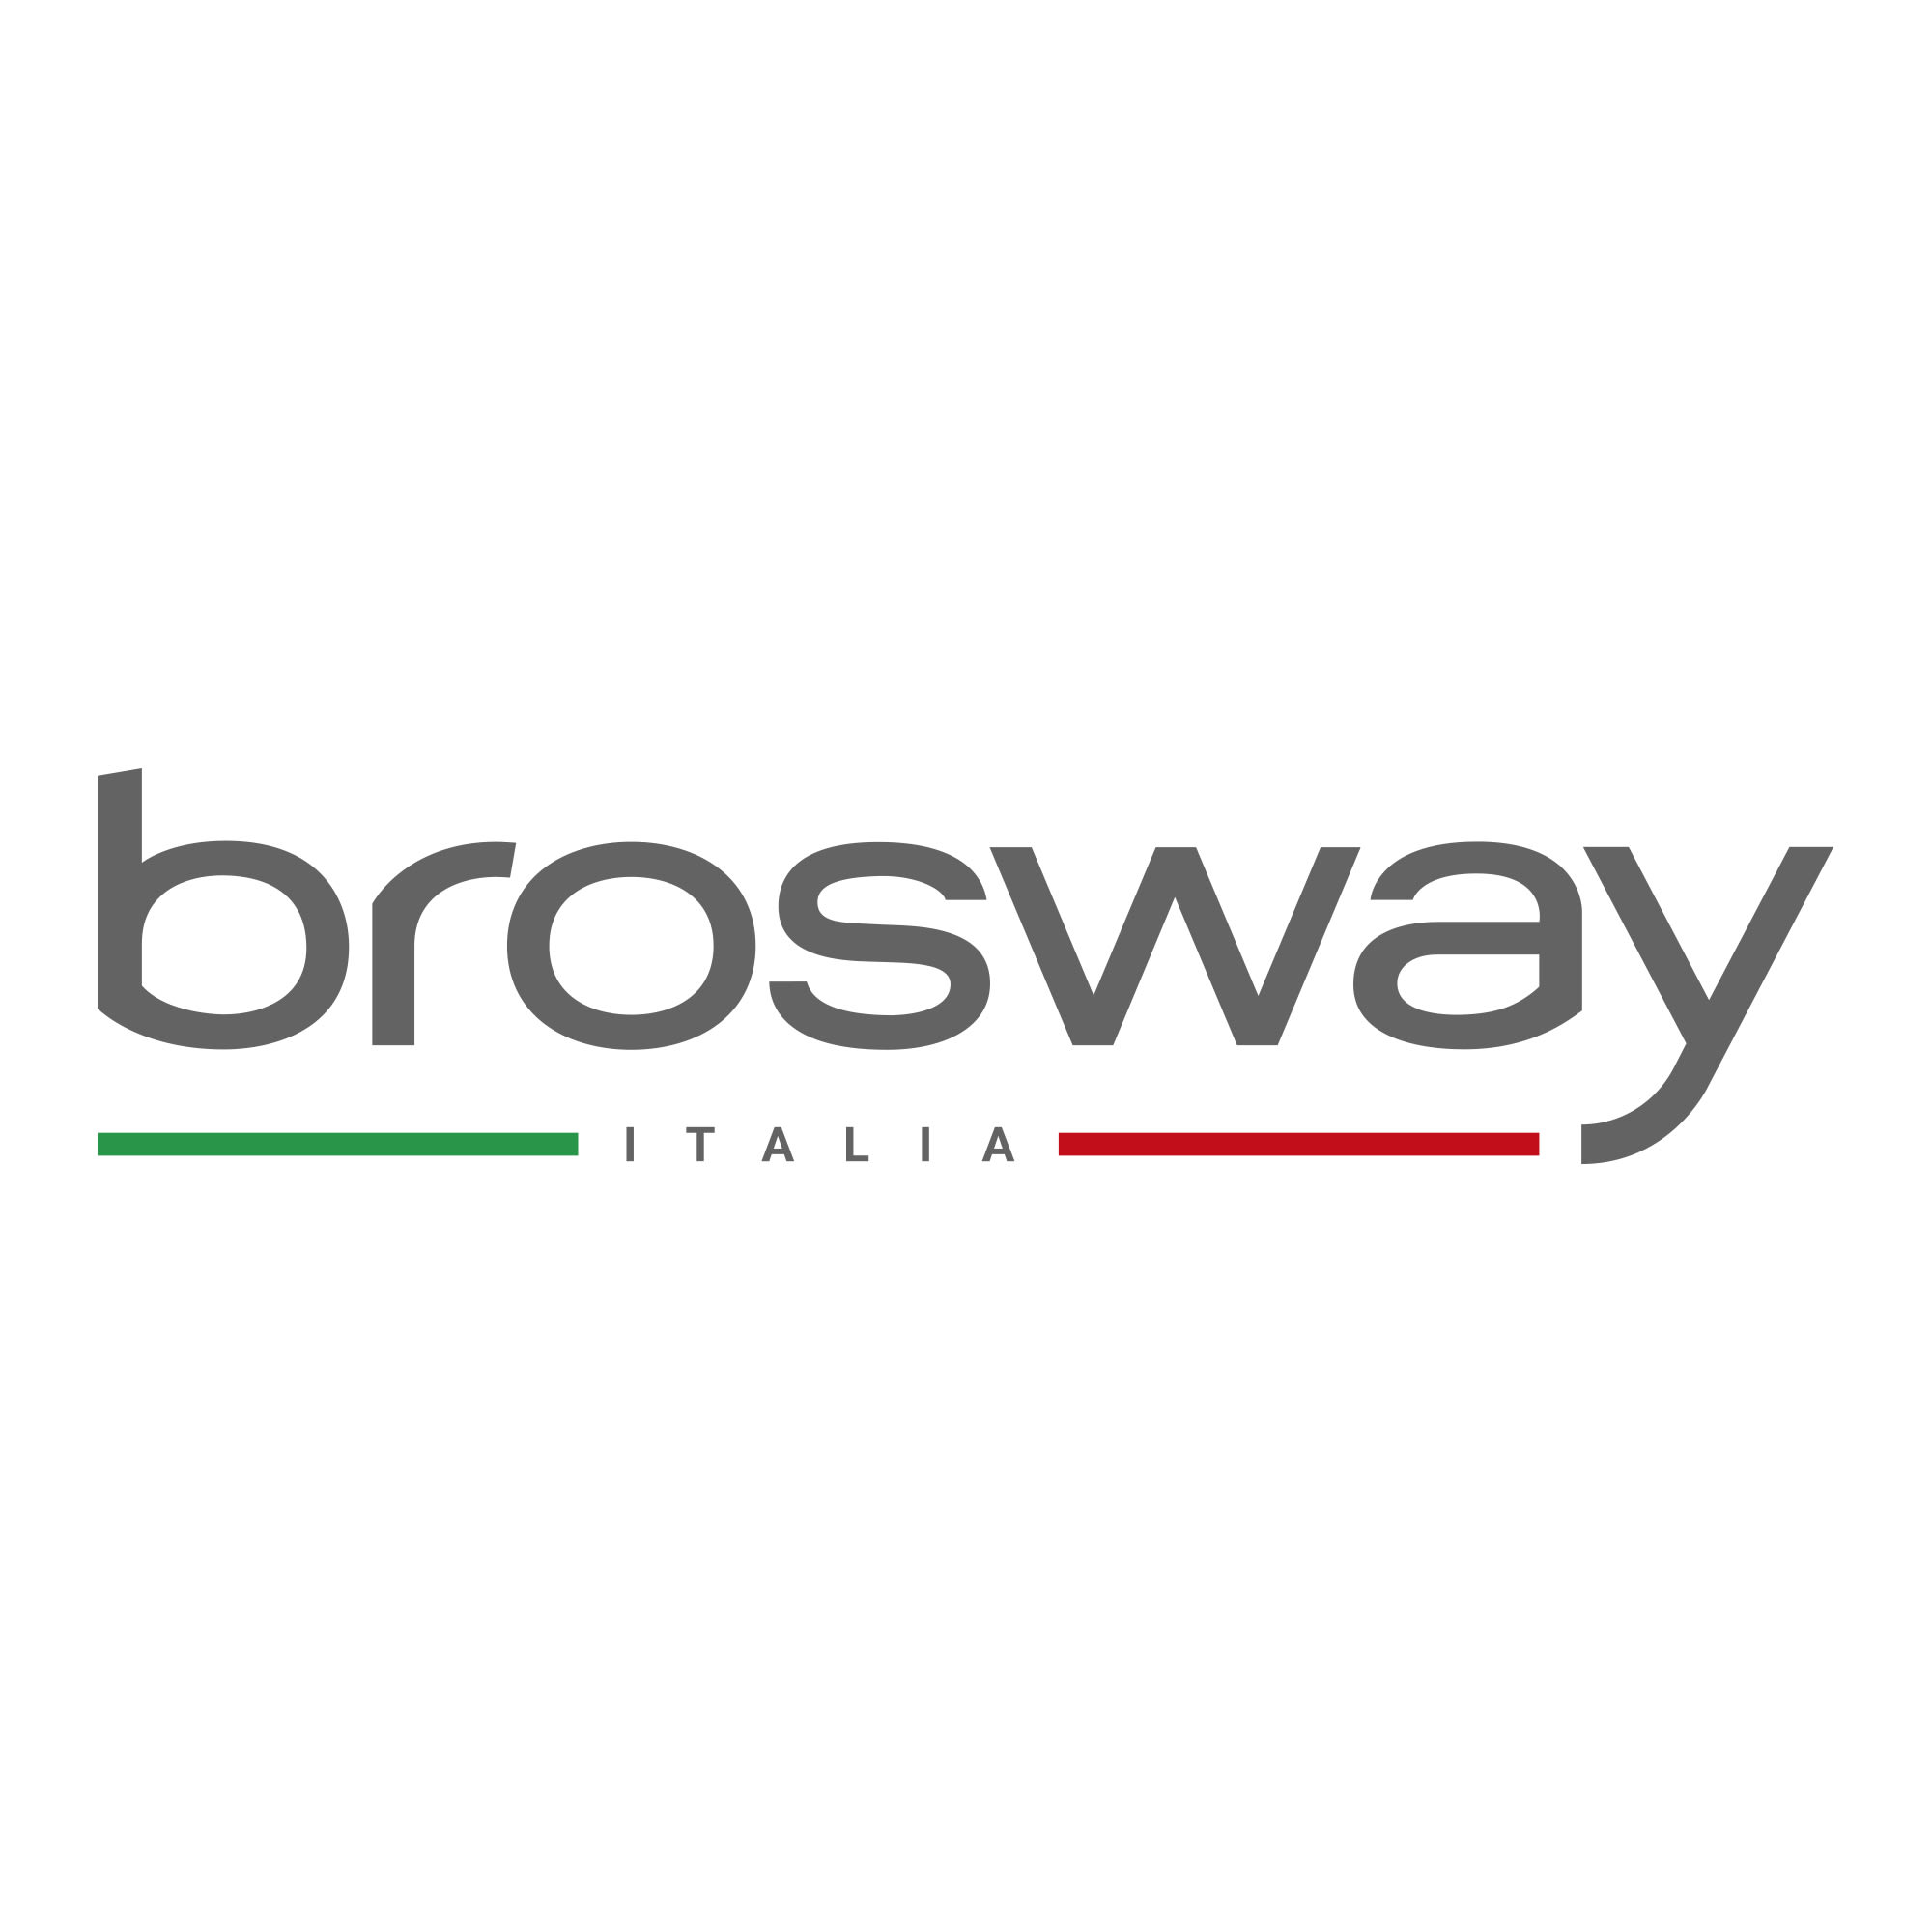 BROSWAY ITALIA logo